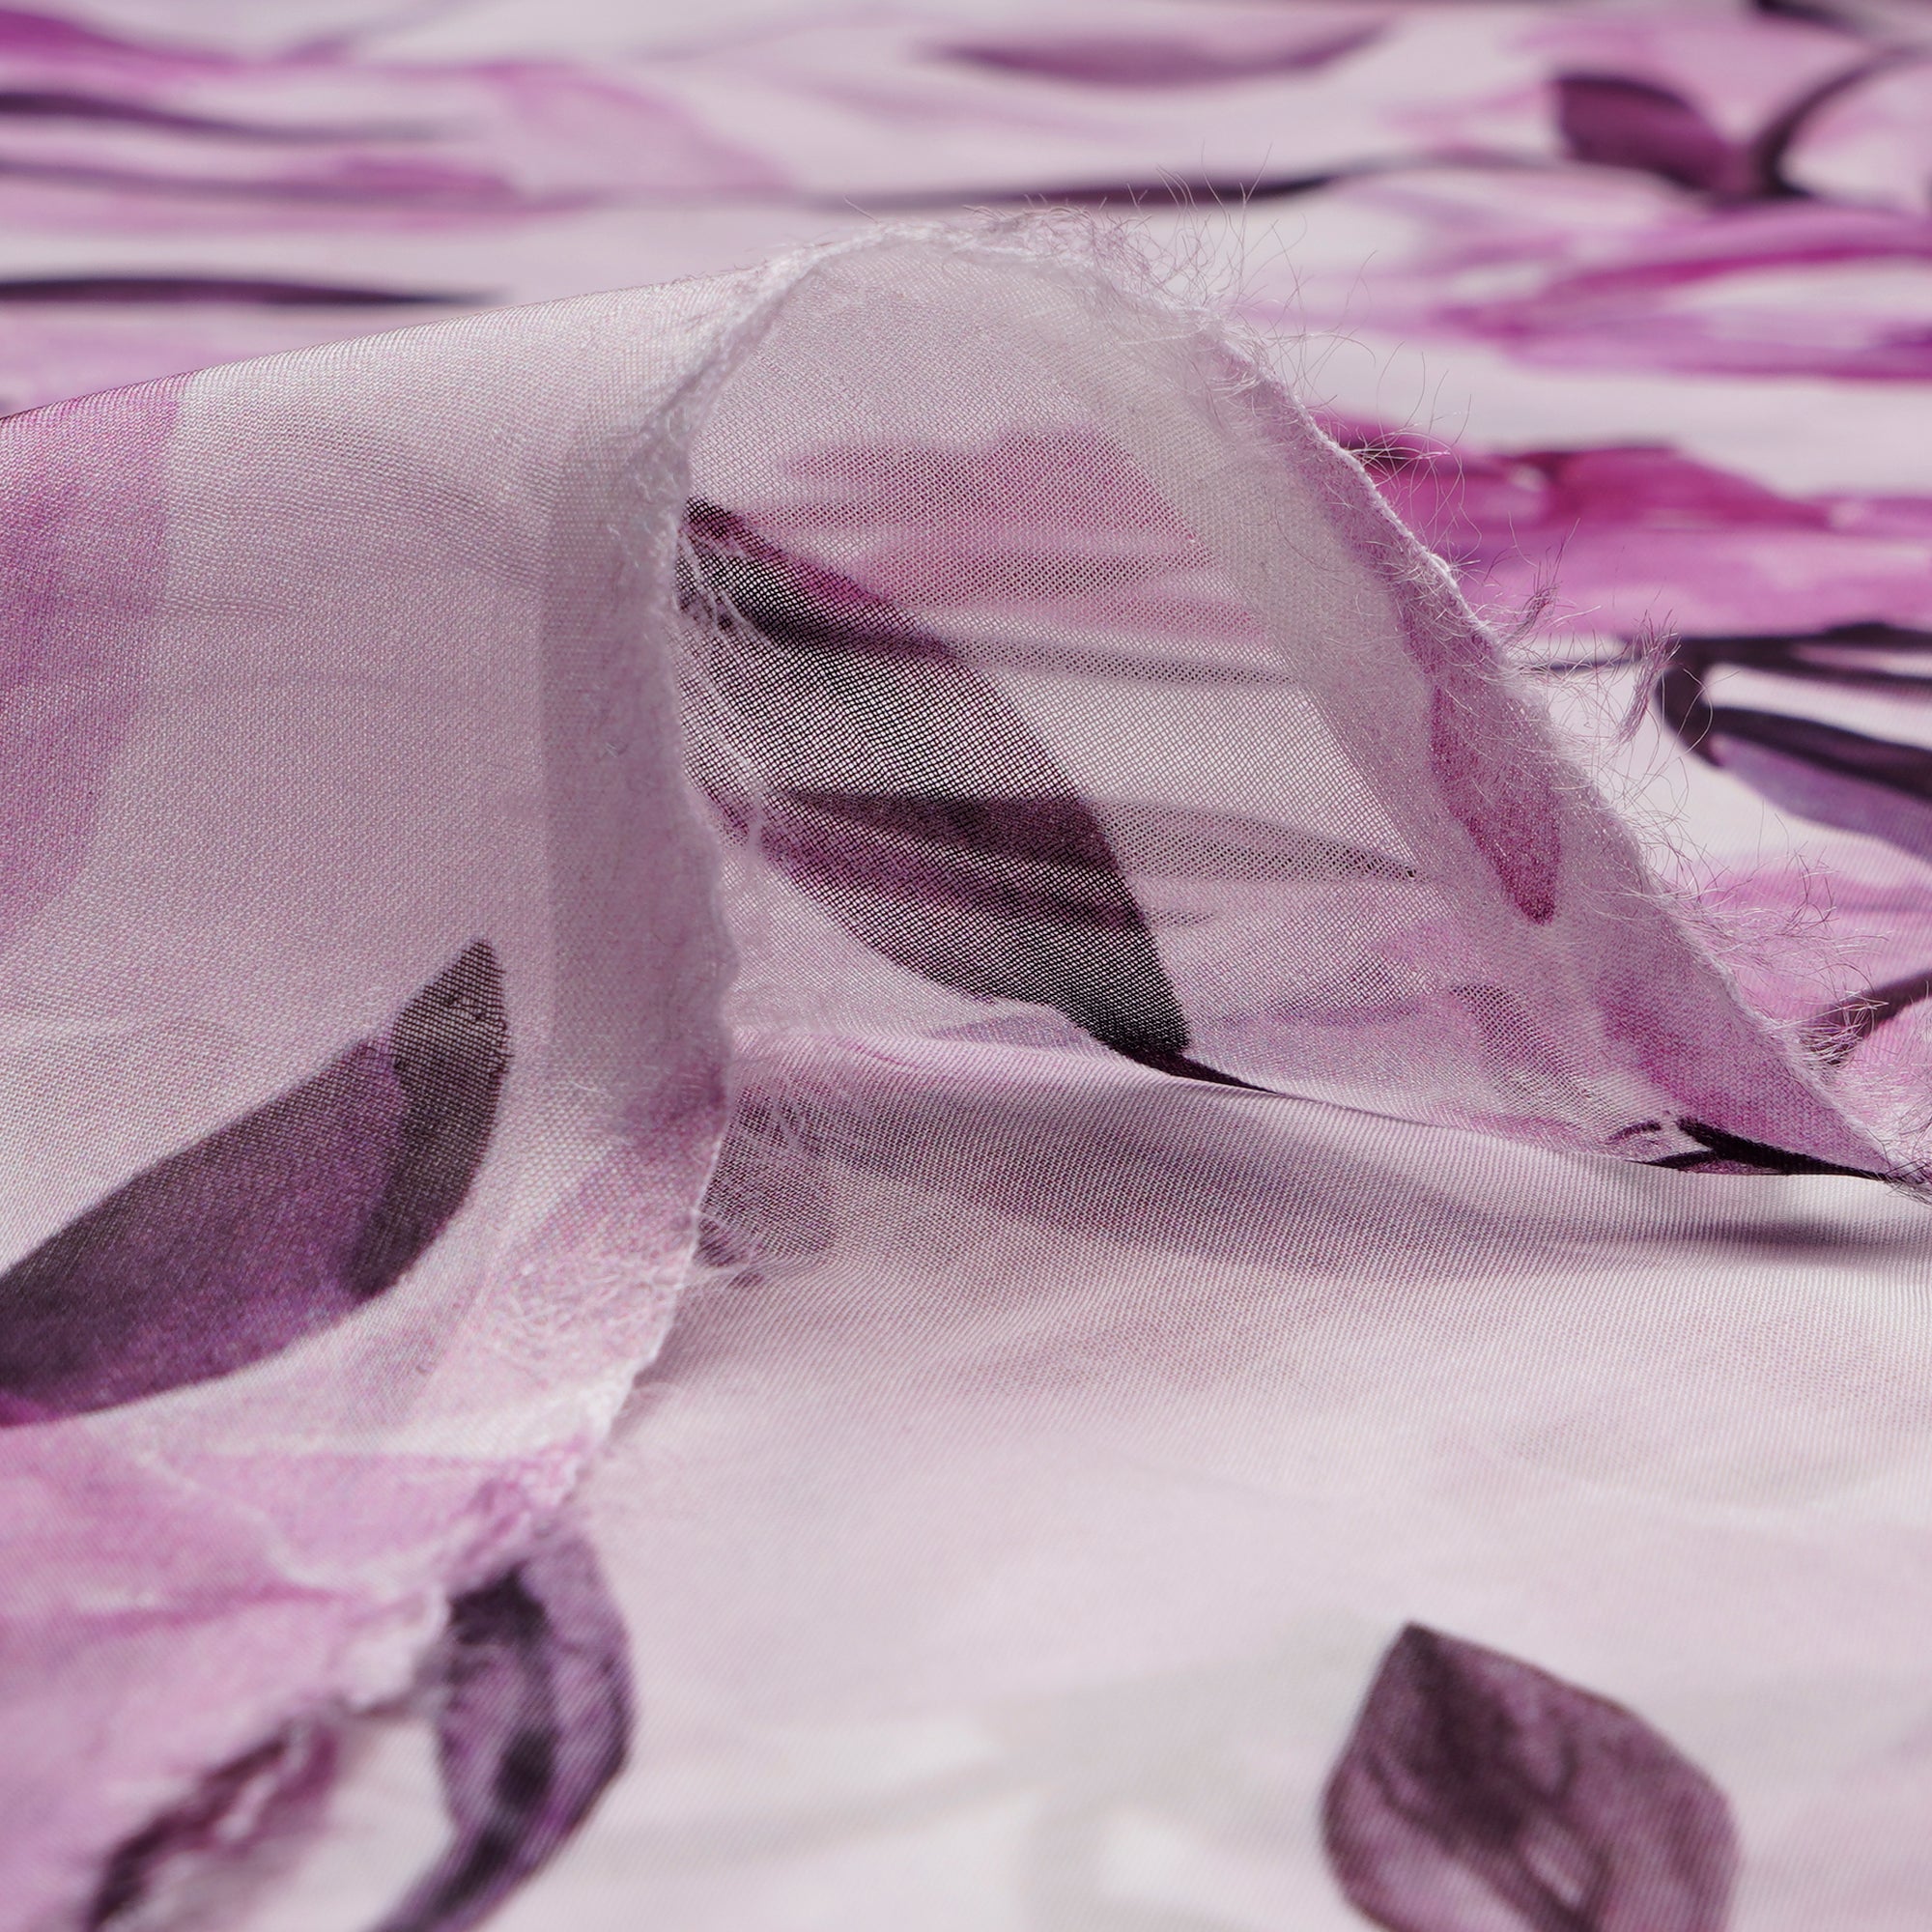 White-Purple Floral Pattern Digital Printed Viscose Organza Fabric